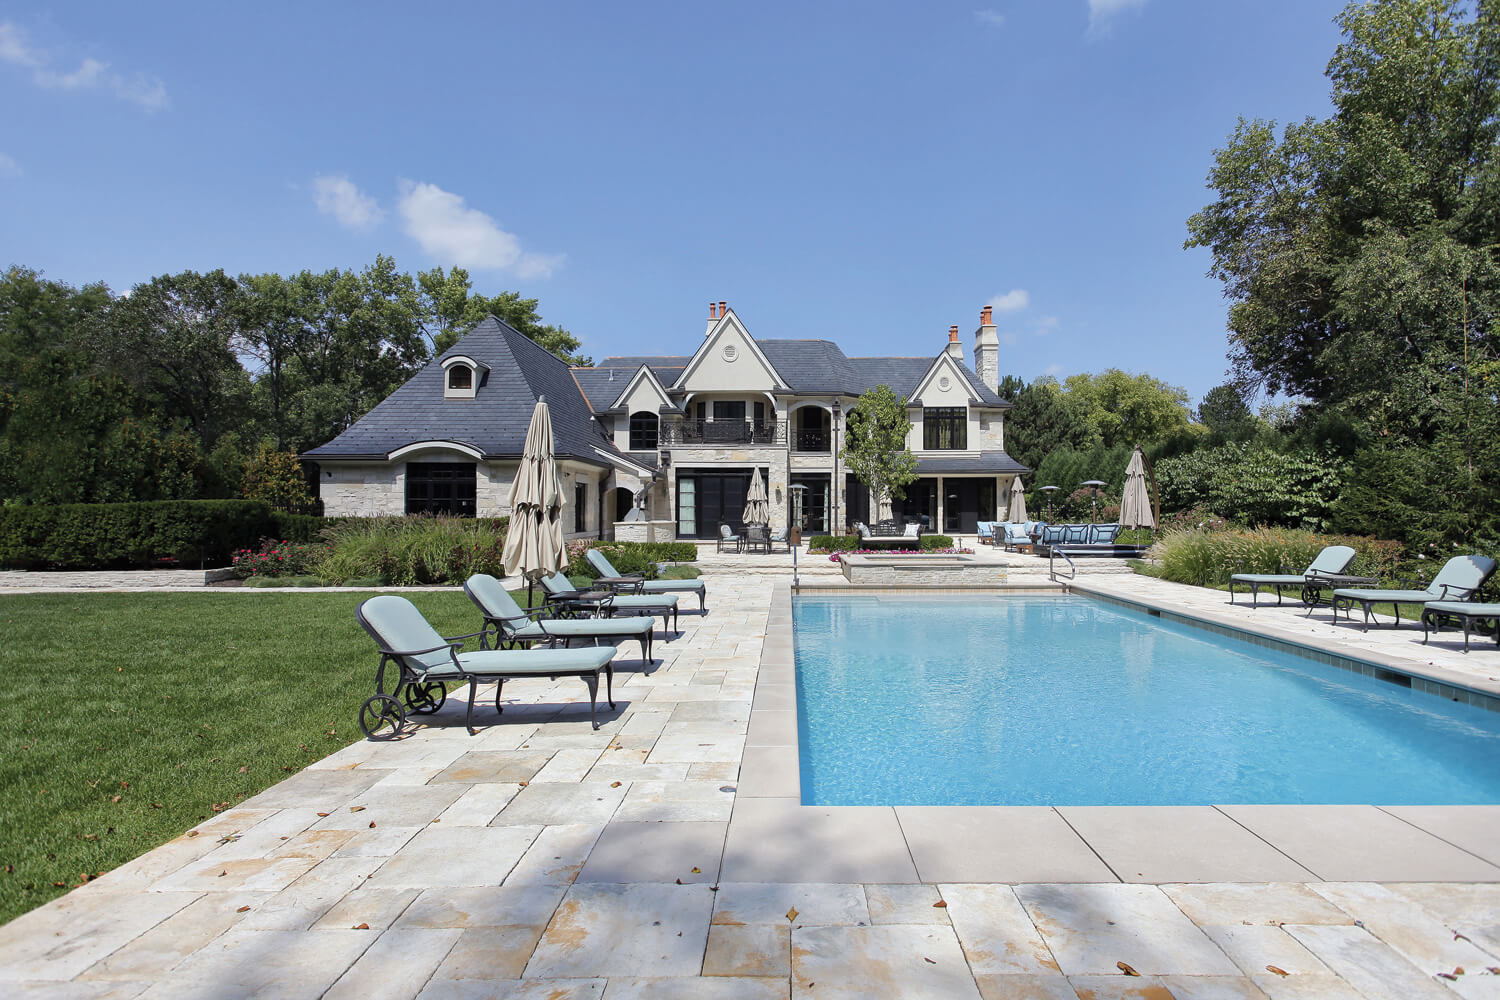 Beautiful landscape design & renovation in Vaughan backyard with inground rectangle pool, patio furniture & stonework.